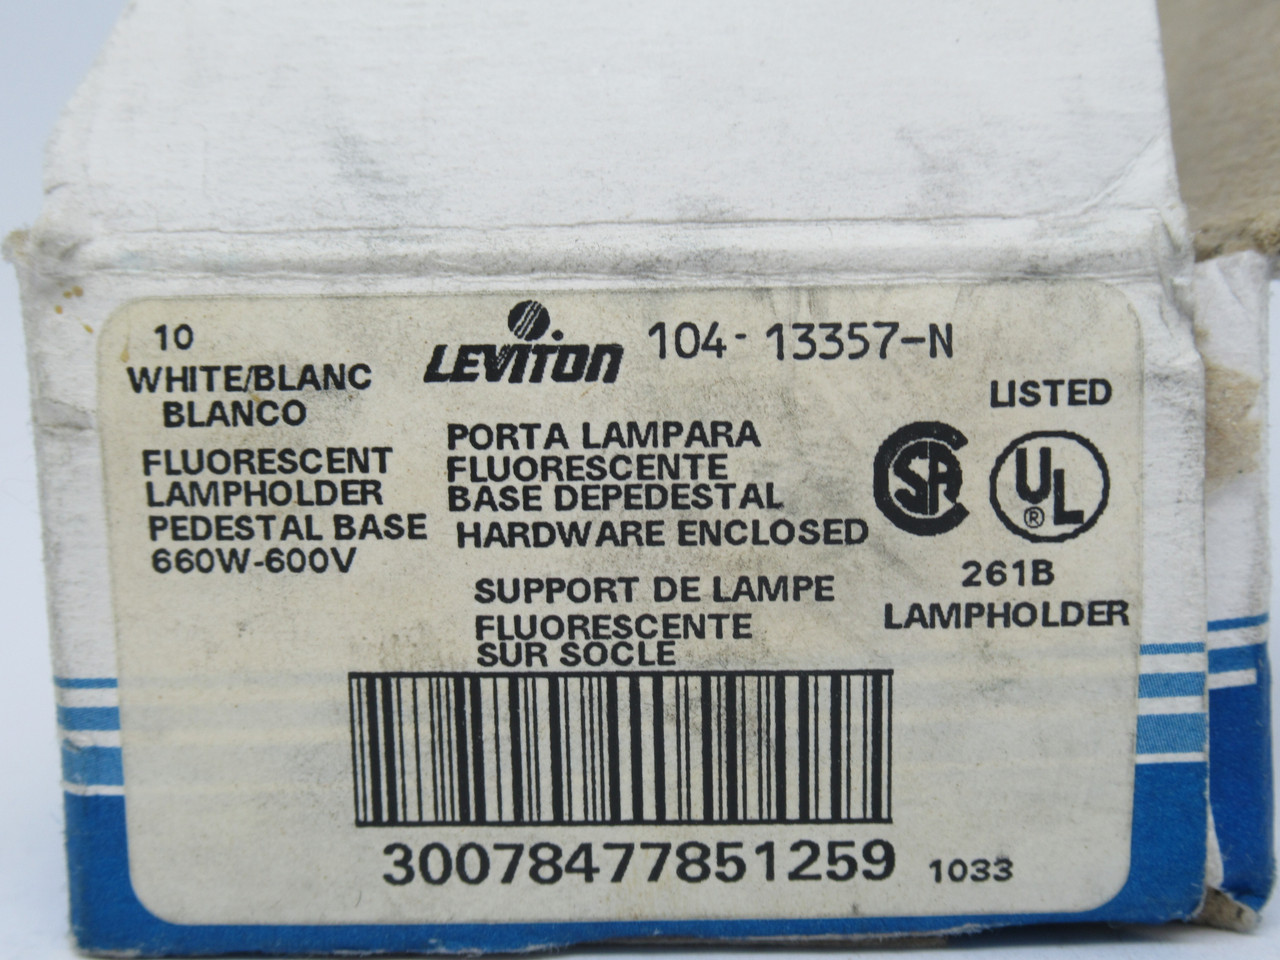 Leviton 13357-N Pedestal Base Fluorescent Lamp Holder 660W 600V Lot Of 7 NEW